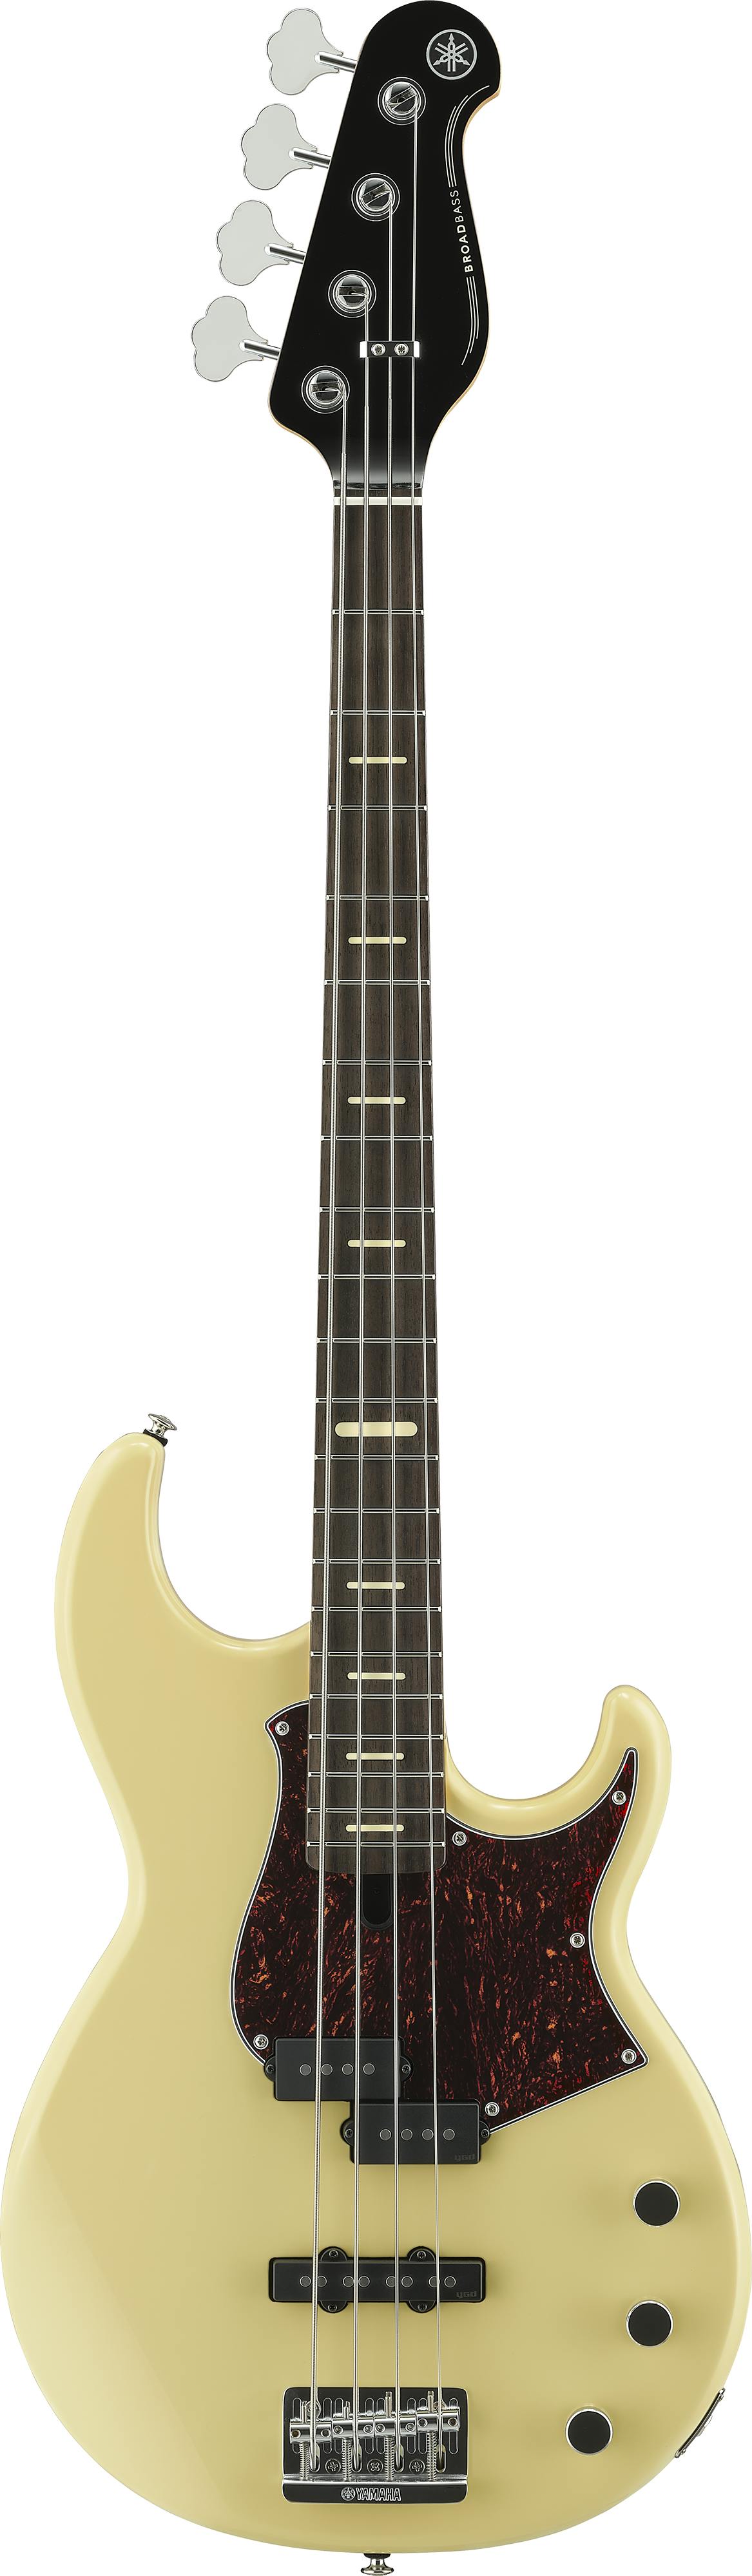 Yamaha BBP34 MIJ 4-string Bass Guitar in Vintage White - Andertons 